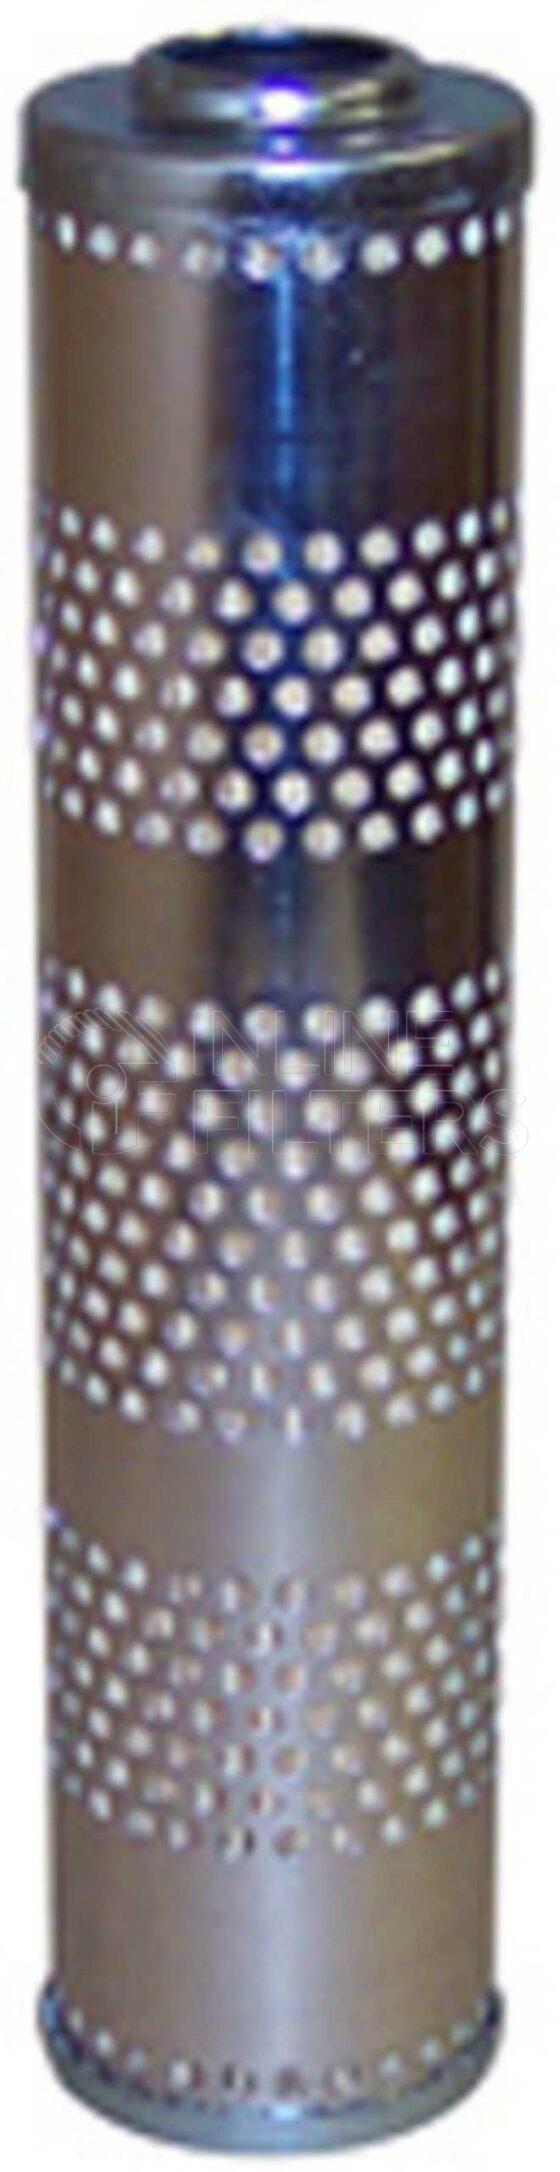 Baldwin PT9198. Hydraulic Filter Product – Brand Specific Baldwin – Cartridge Product Baldwin filter product